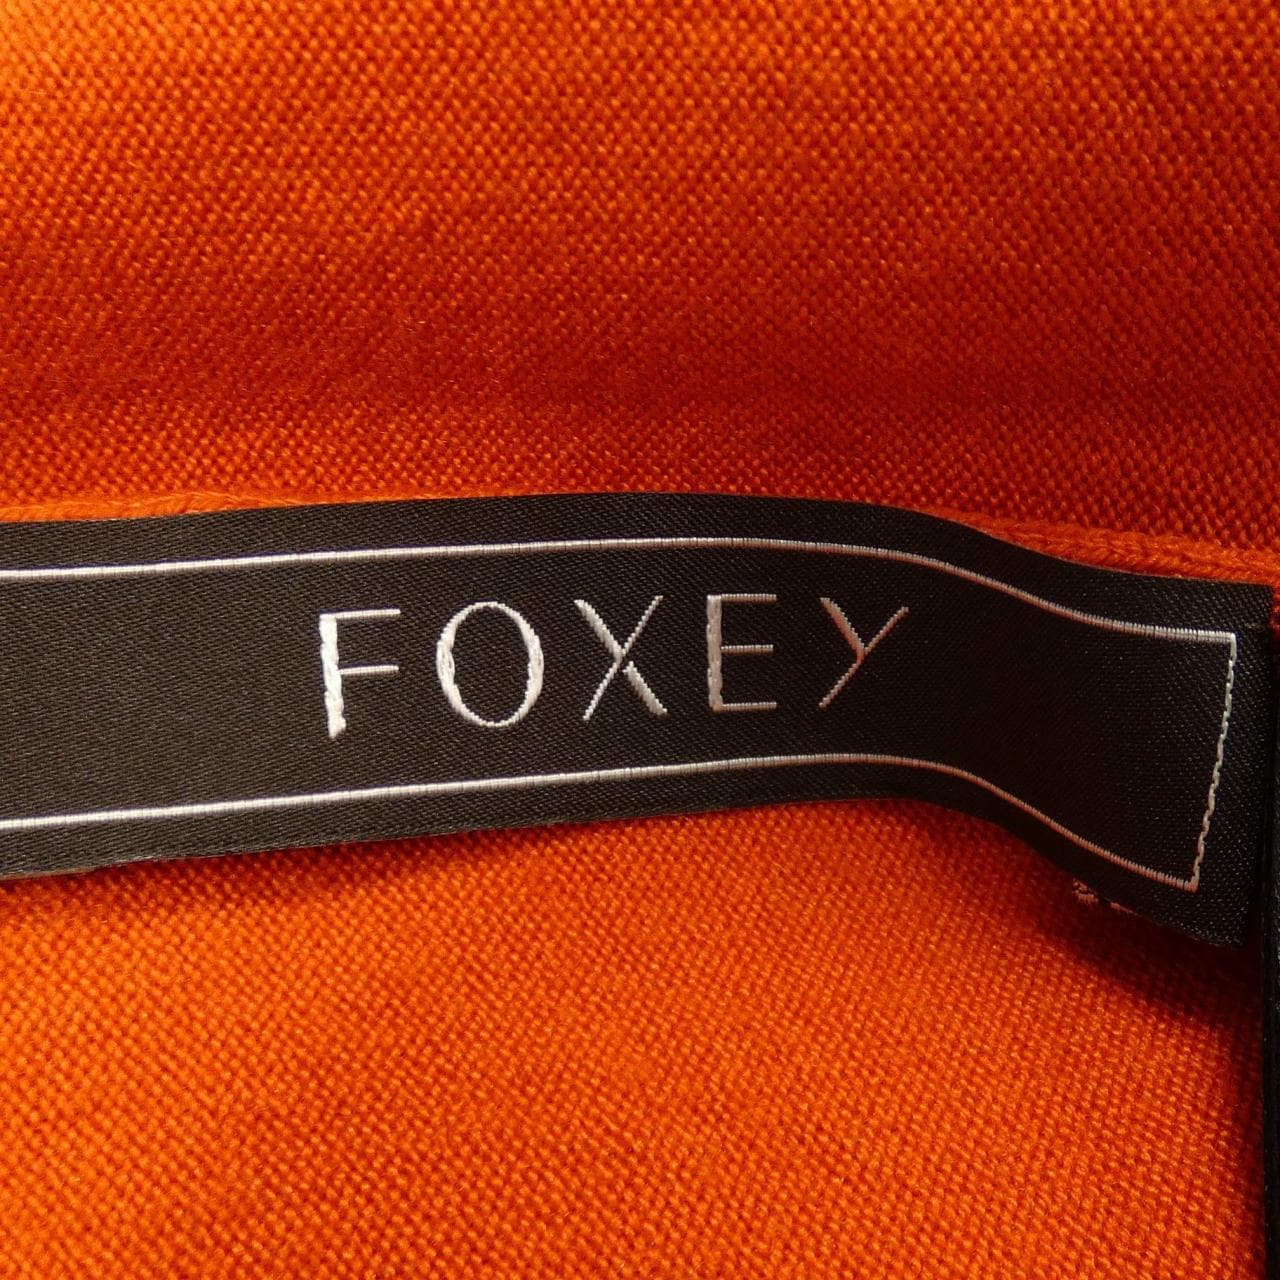 Foxy FOXEY PARKER